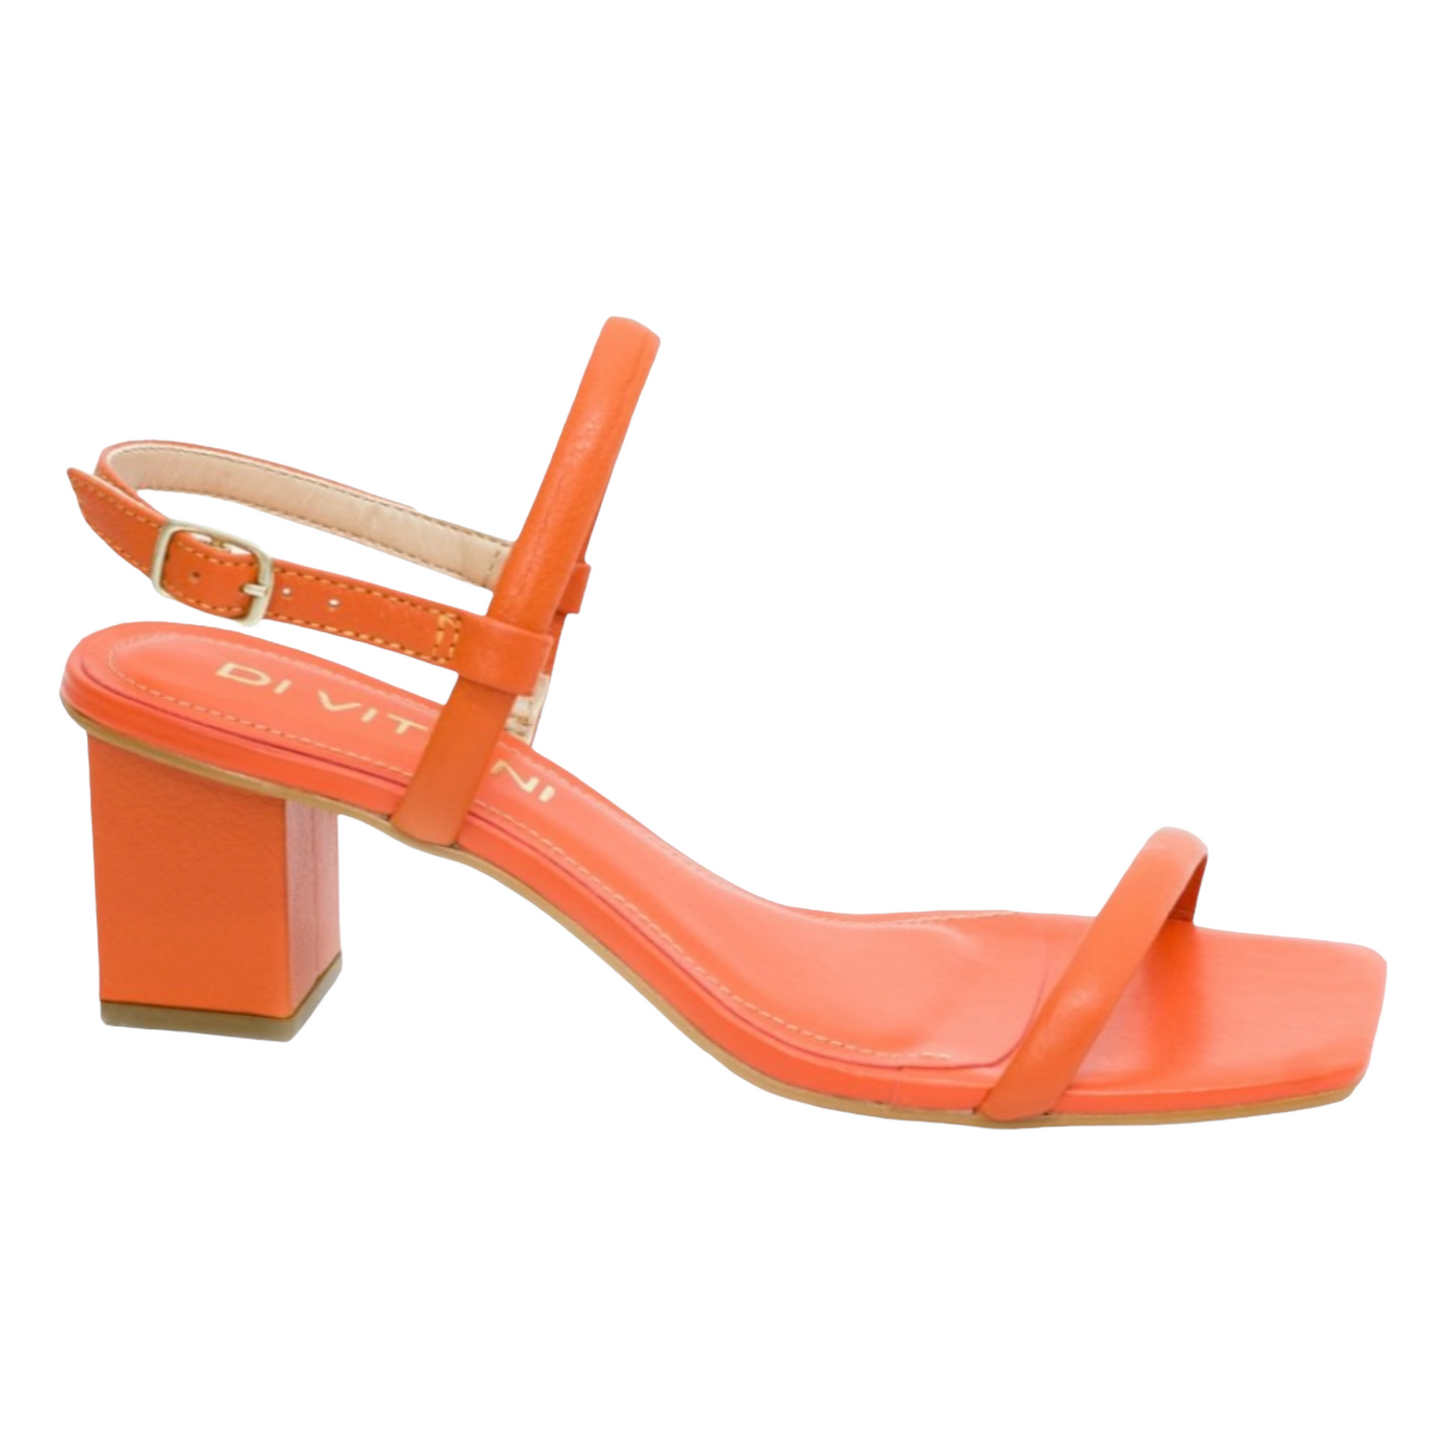 Rio Orange Leather Heeled Sandal